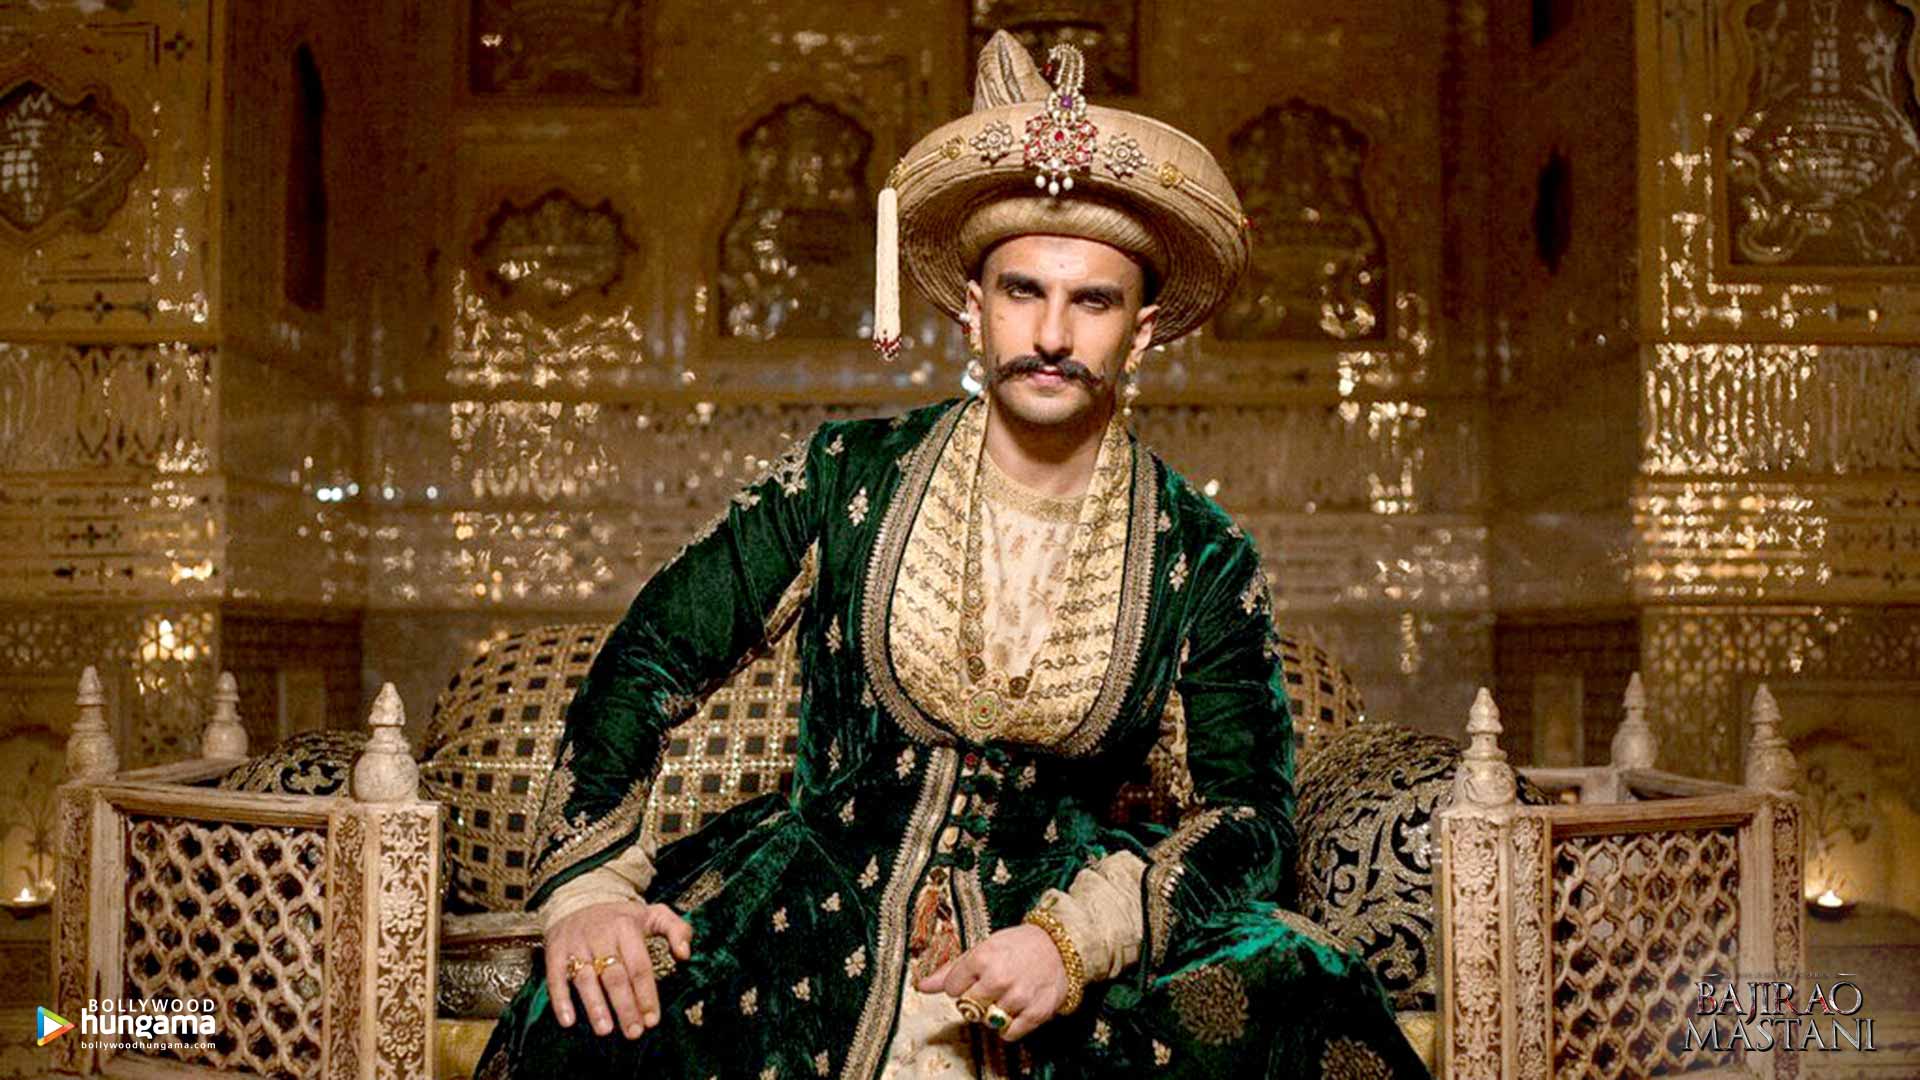 Ranveer Singh as Bajiro in Bajiro Mastani